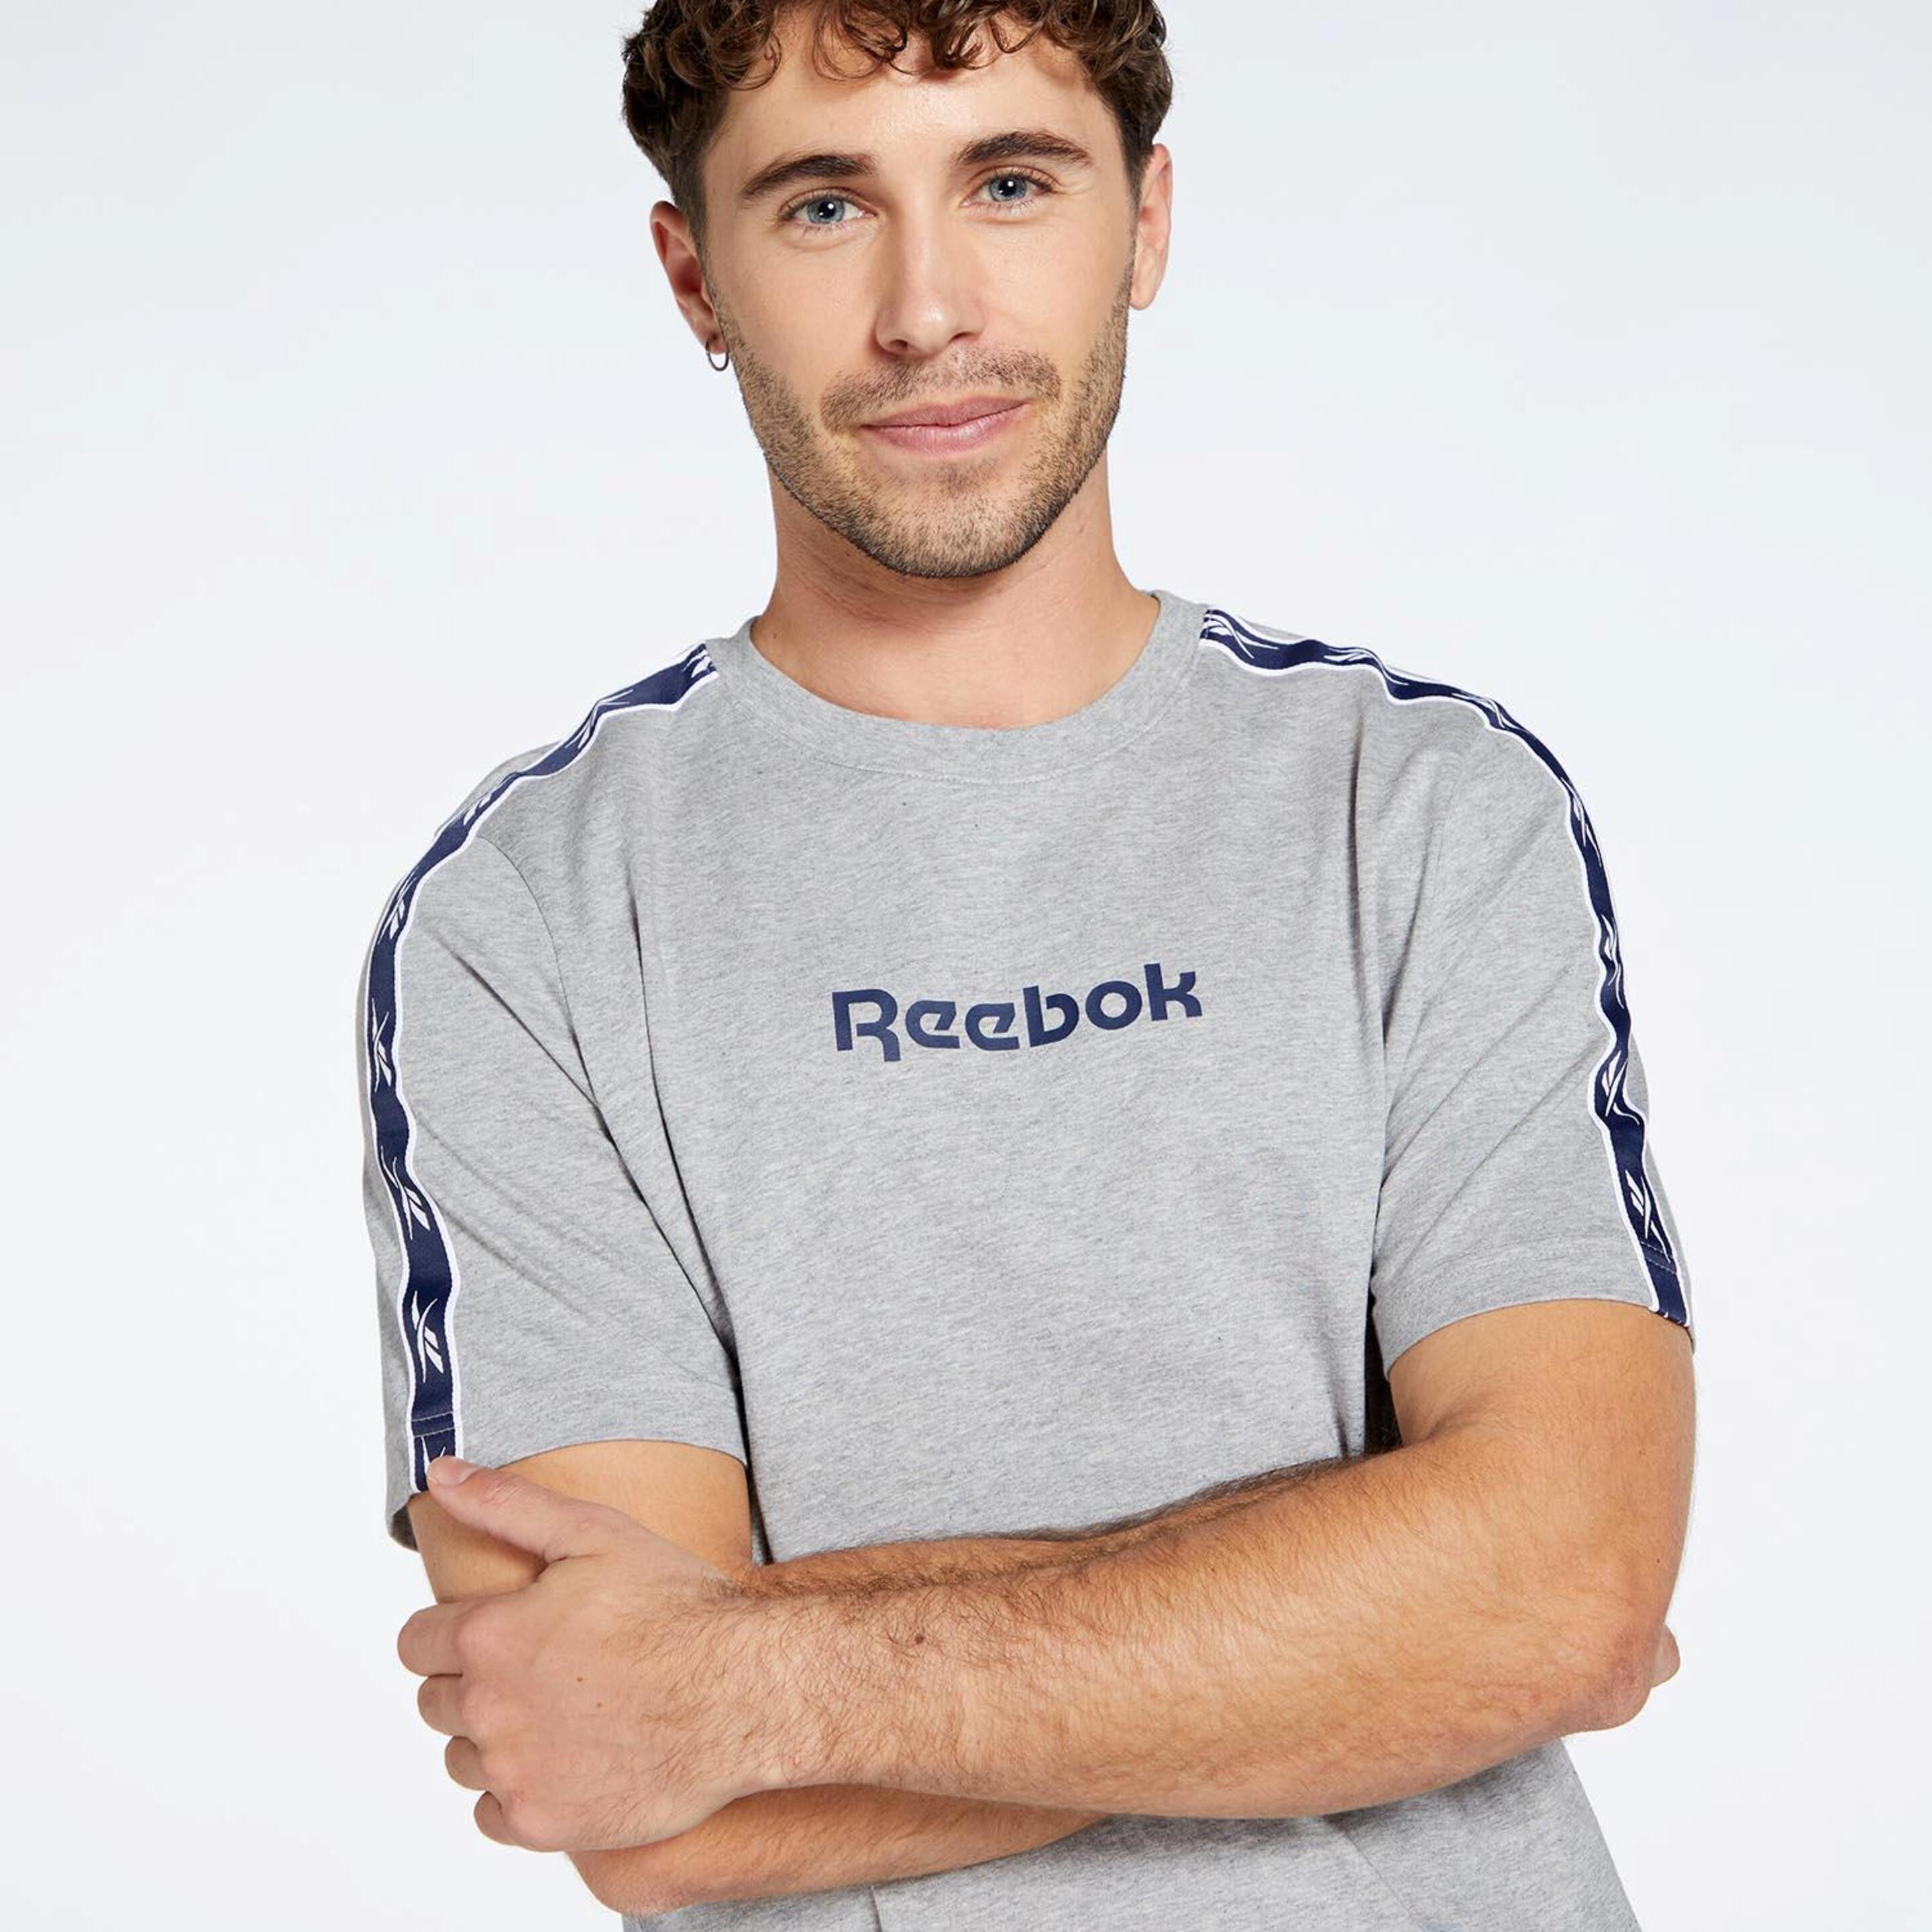 Camiseta Reebok